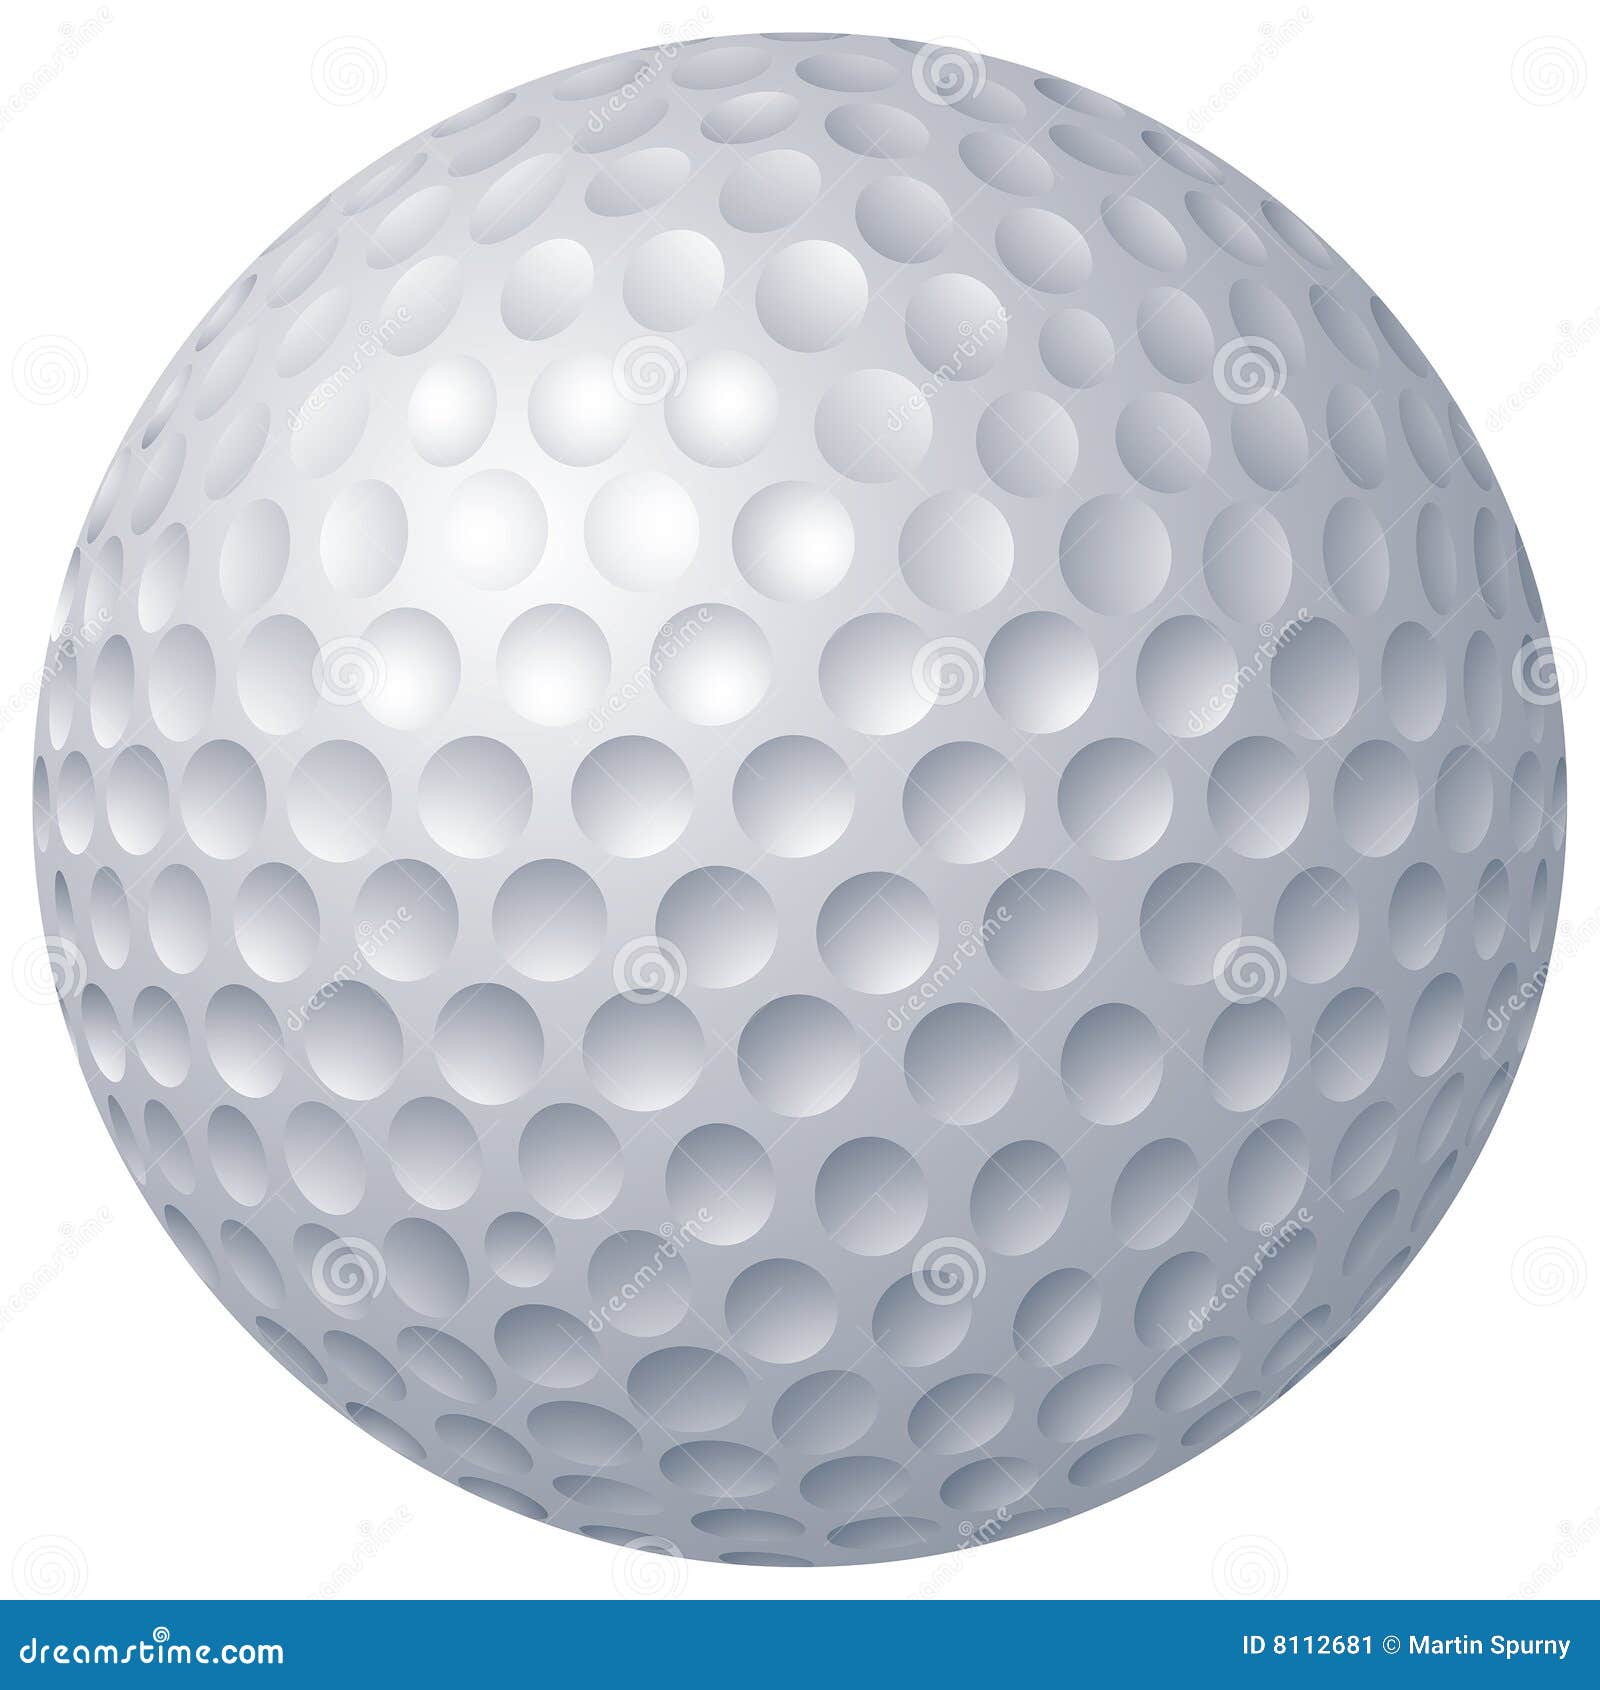 clipart golf ball - photo #44